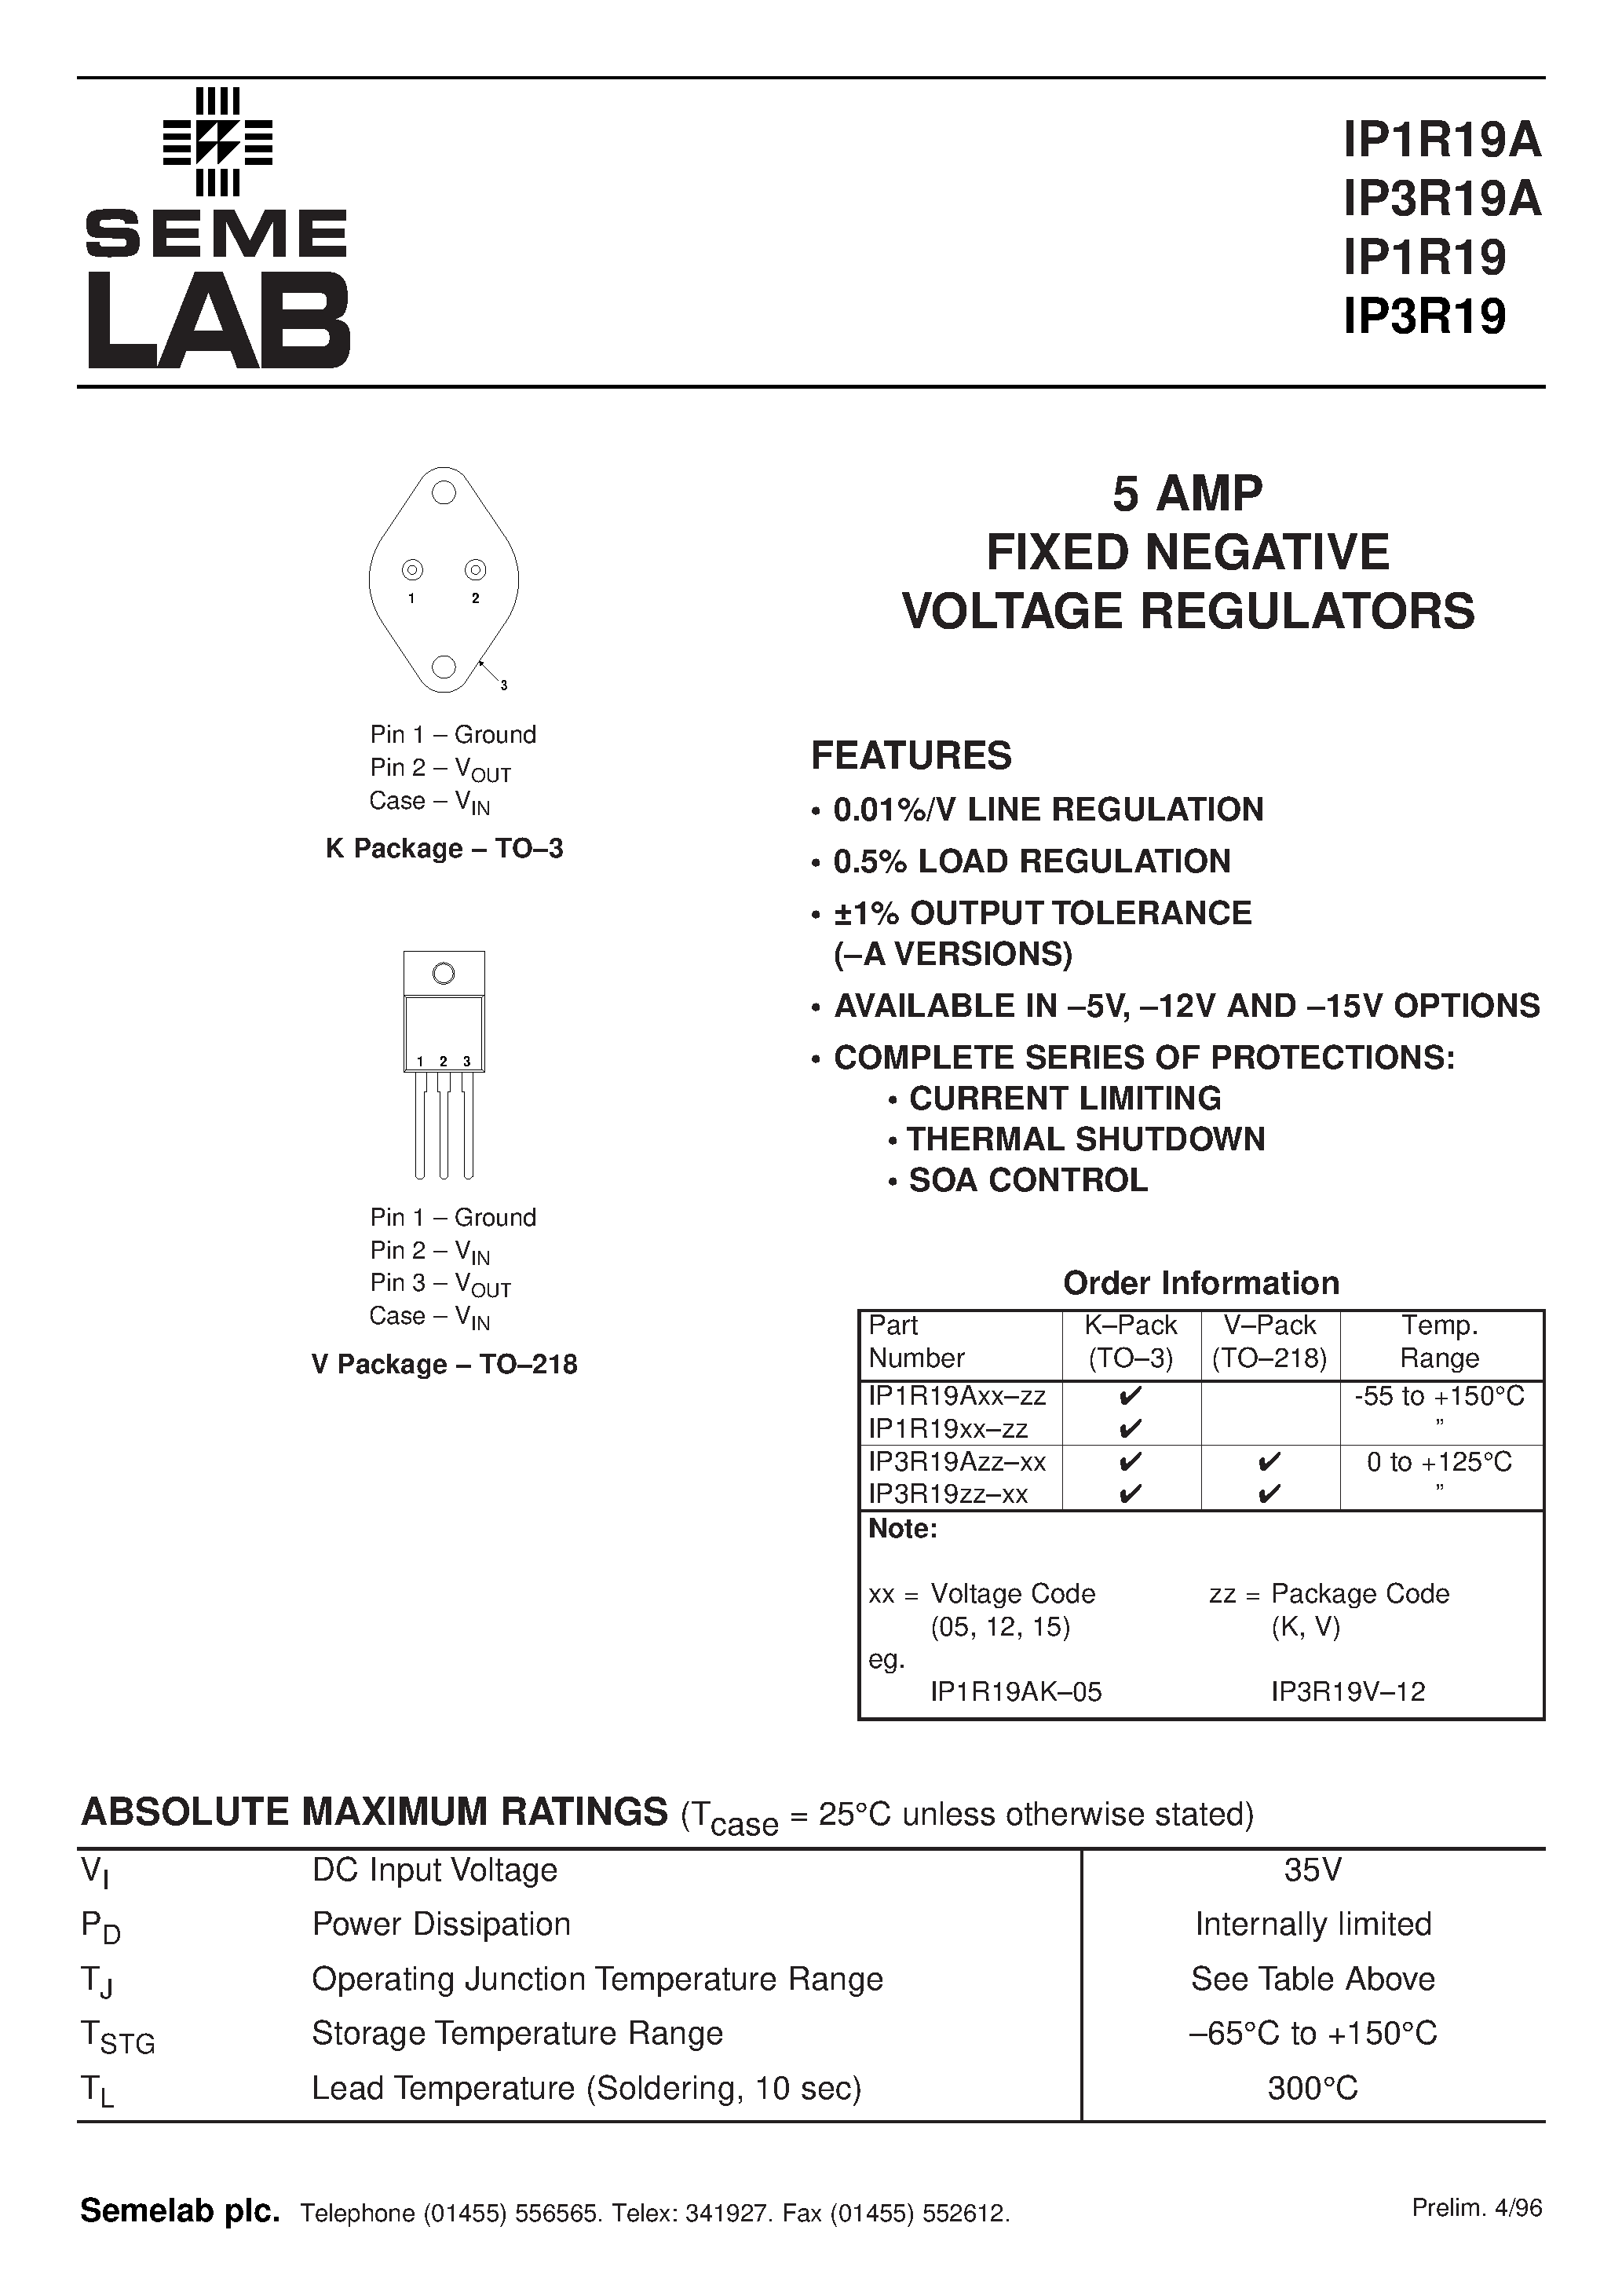 Datasheet IP1R1905-K - 5 AMP FIXED NEGATIVE VOLTAGE REGULATORS page 1